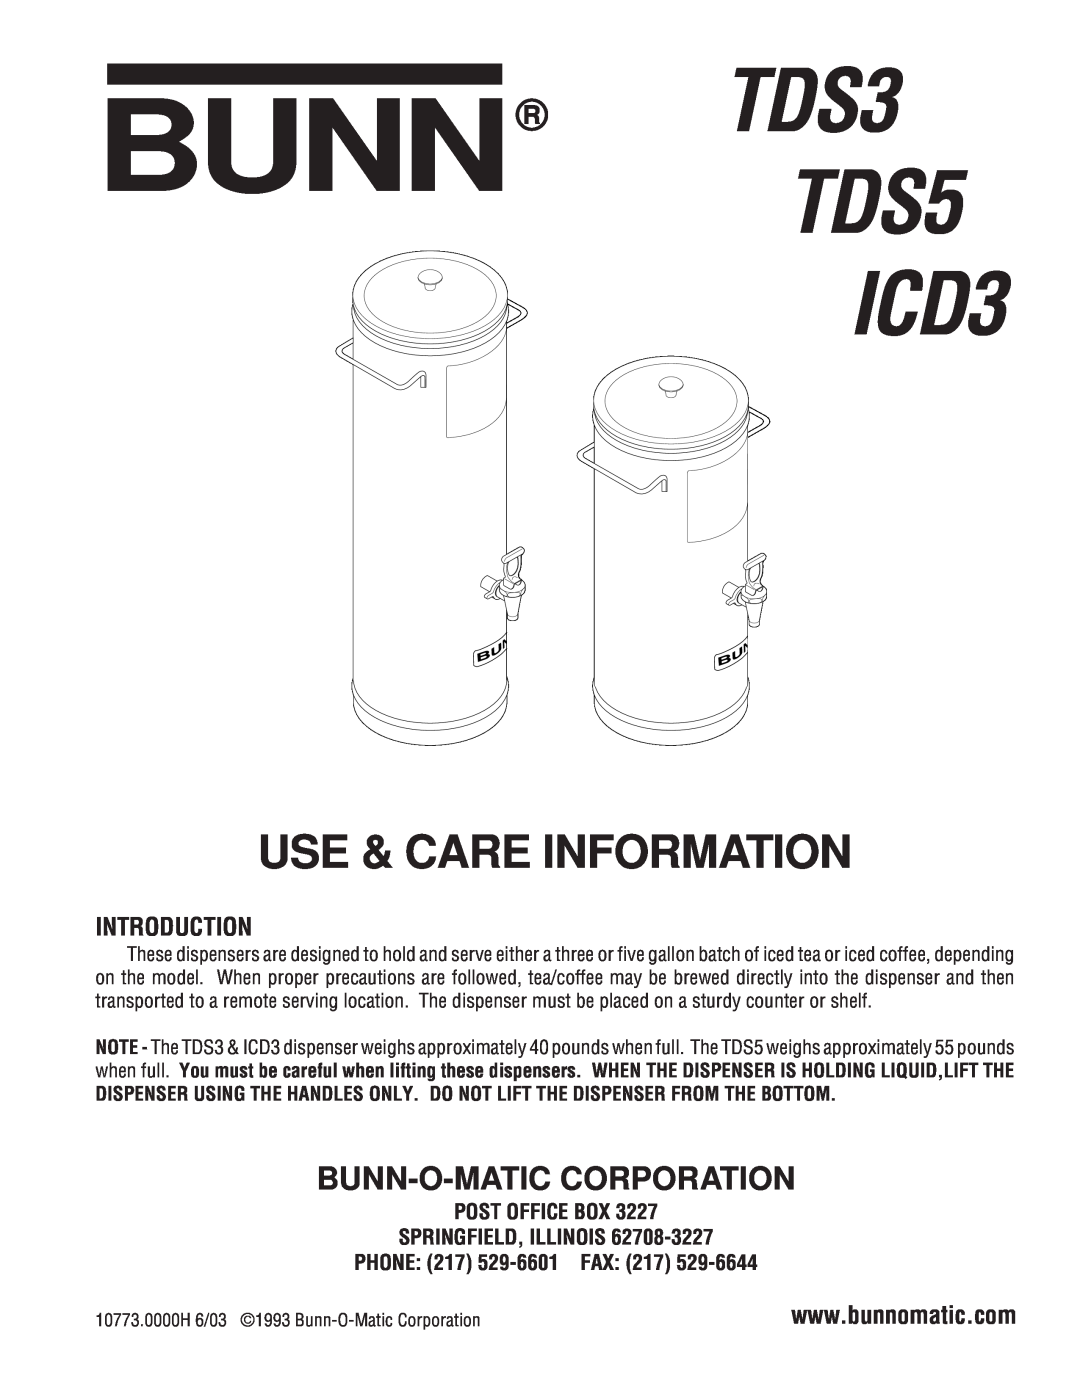 Bunn manual Introduction, TDS3 TDS3.5 TDS5 ICD3, Use & Care Information, Bunn-O-Matic Corporation 